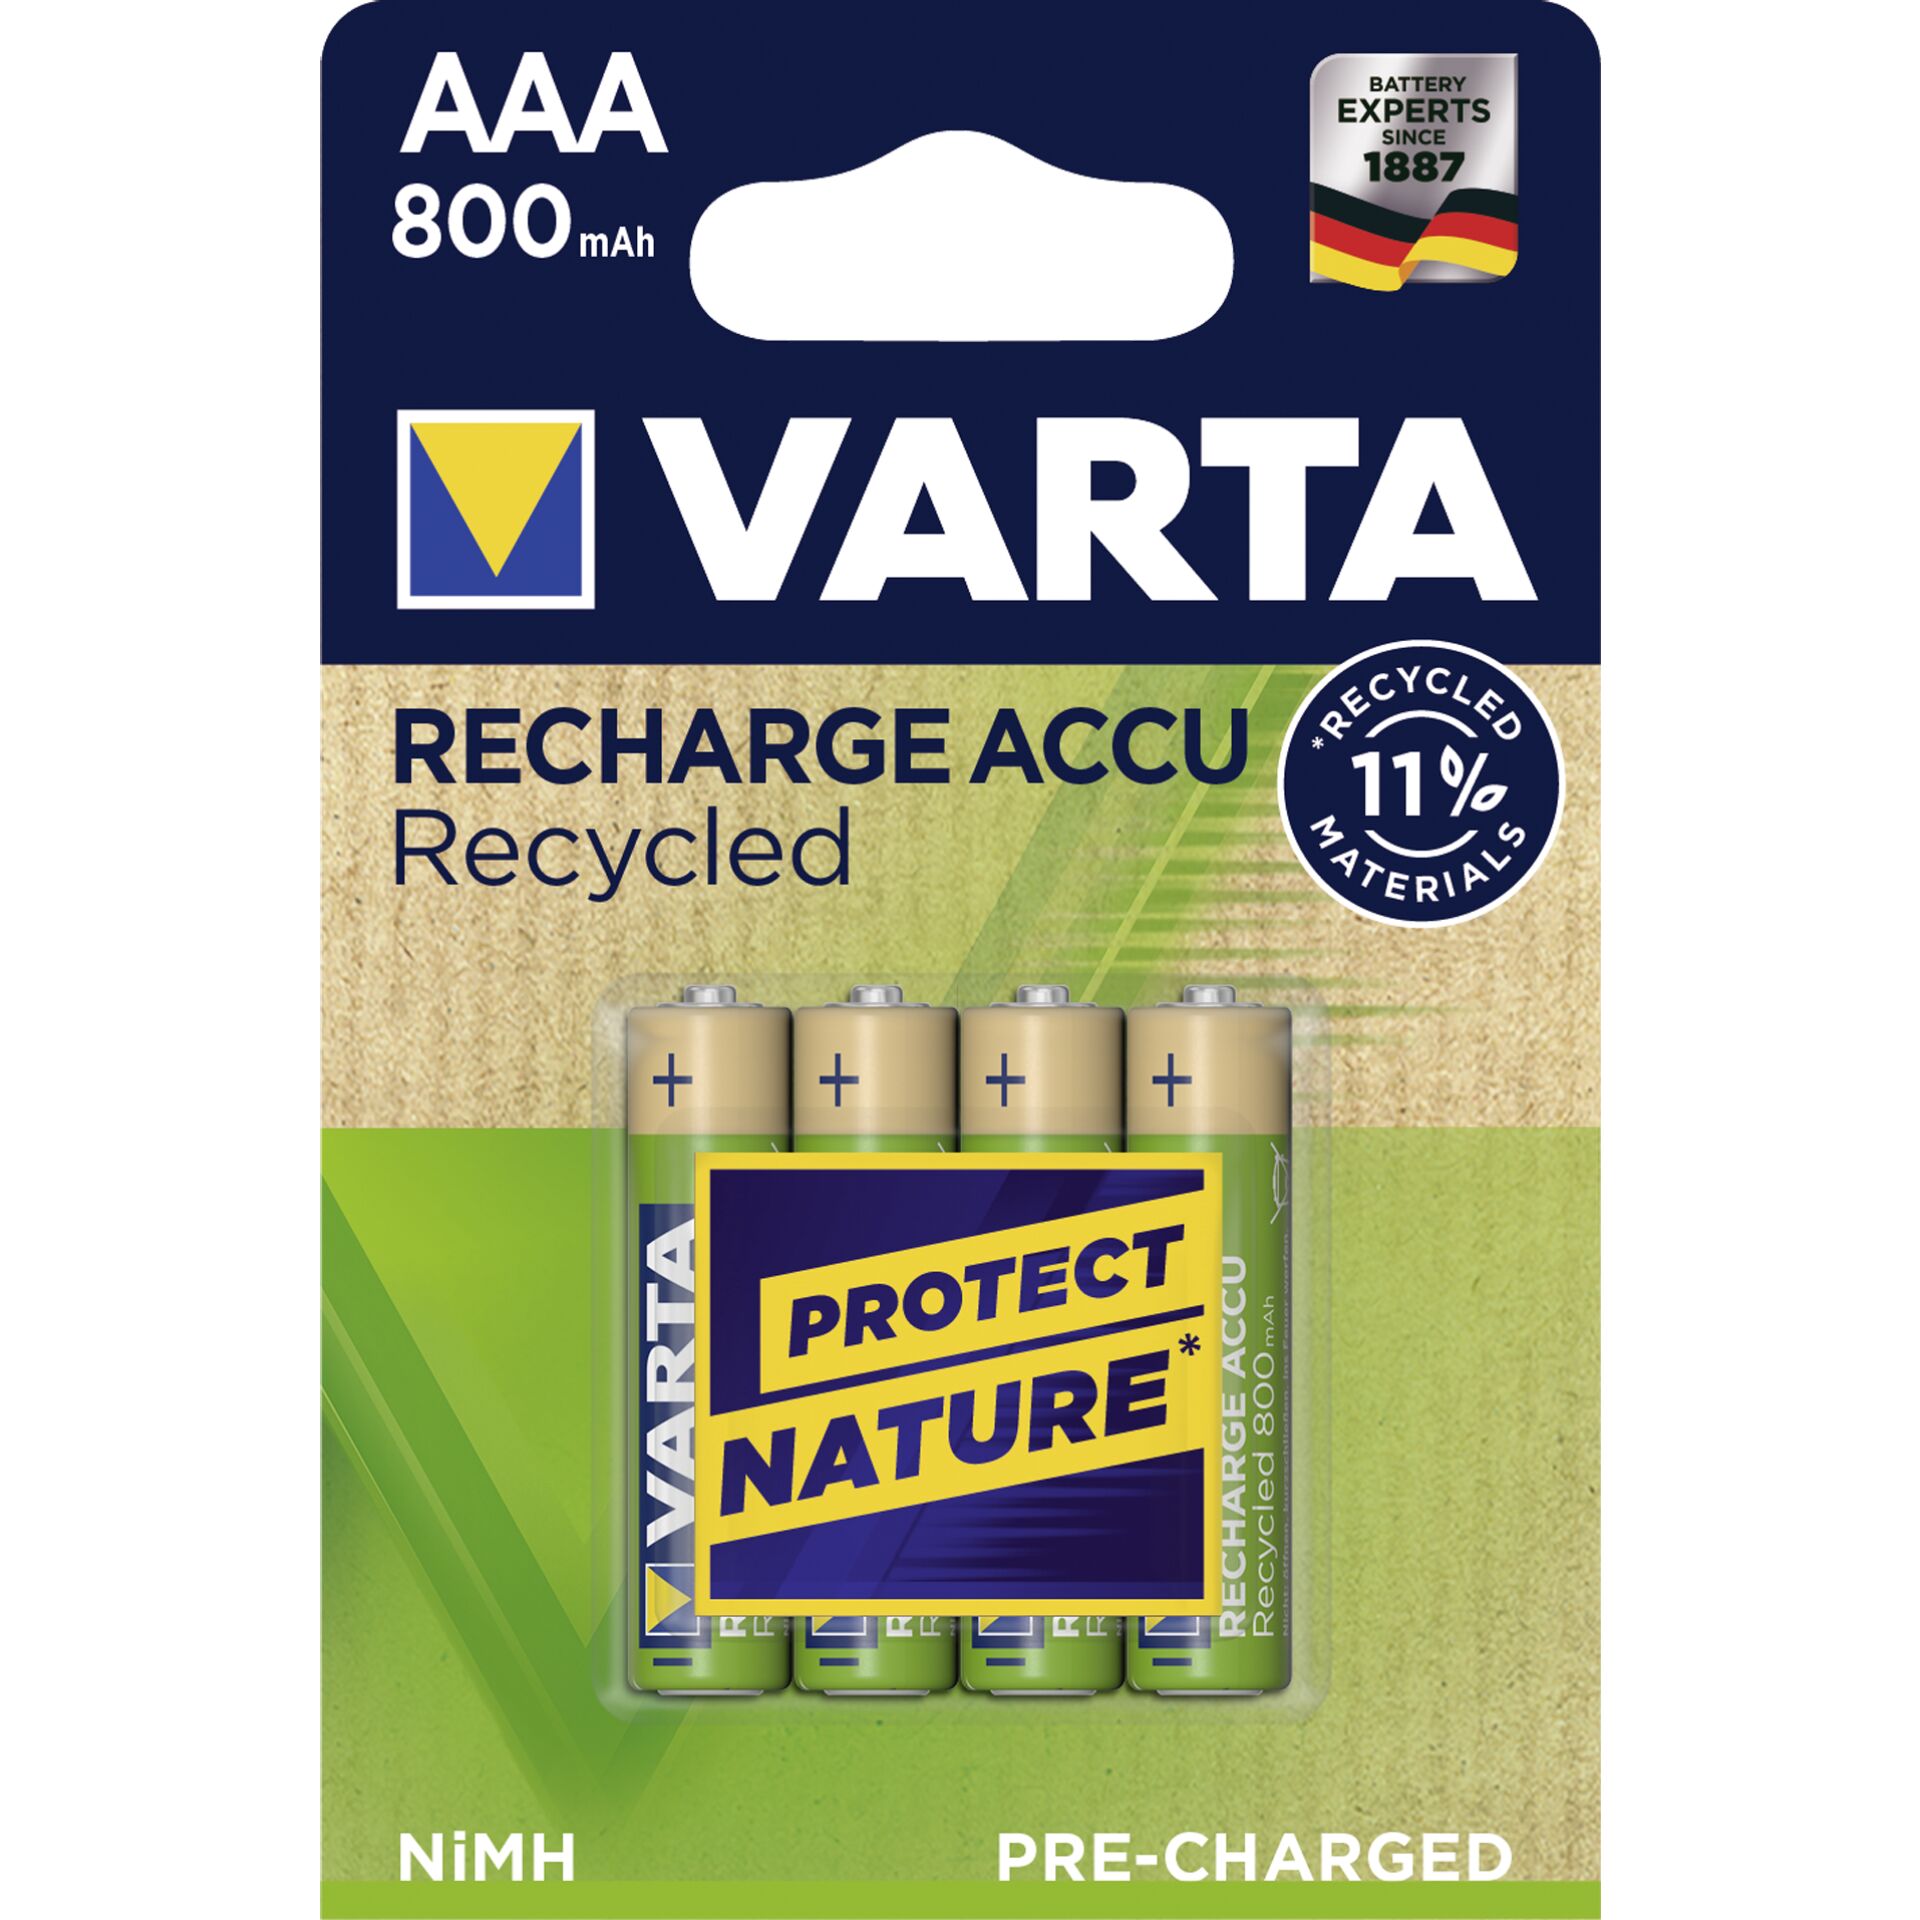 50x4 Varta RECHARGE ACCU Recycled 800 mAH AAA Micro NiMH